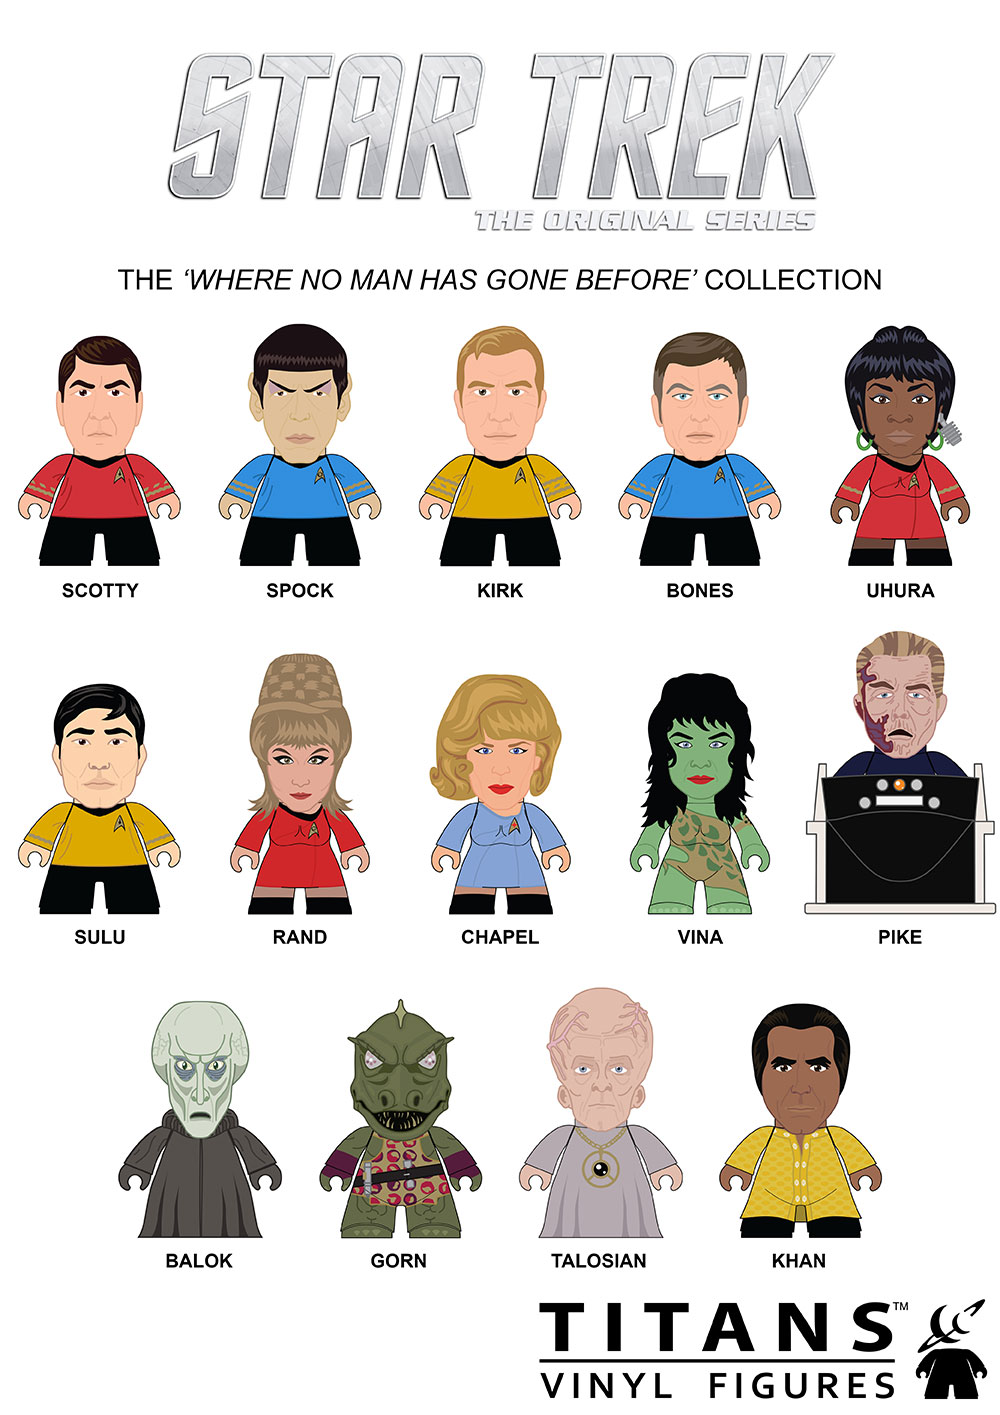 Titan Star Trek Figures